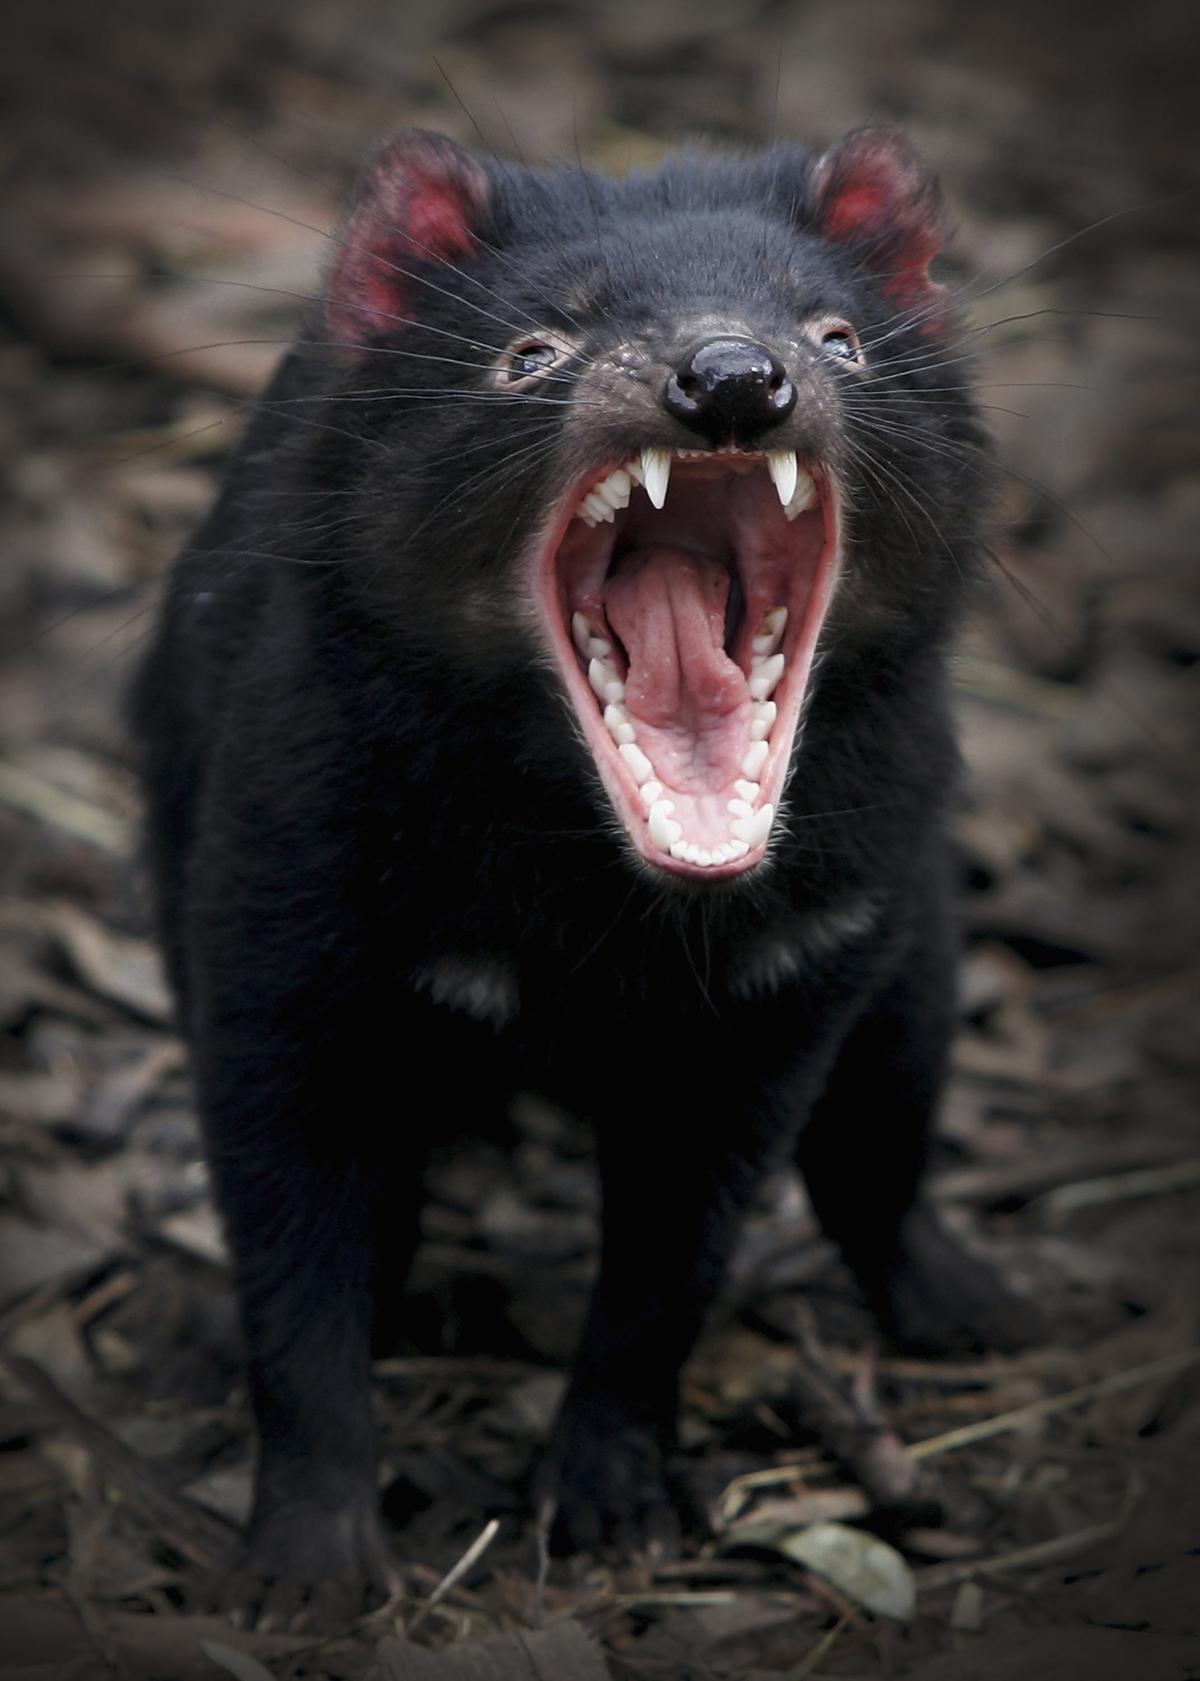 A Tasmanian devil bears its teeth at a quarantine facility Aug. 31, 2005, in Hobart, Australia. (Ian Waldie/Getty Images)